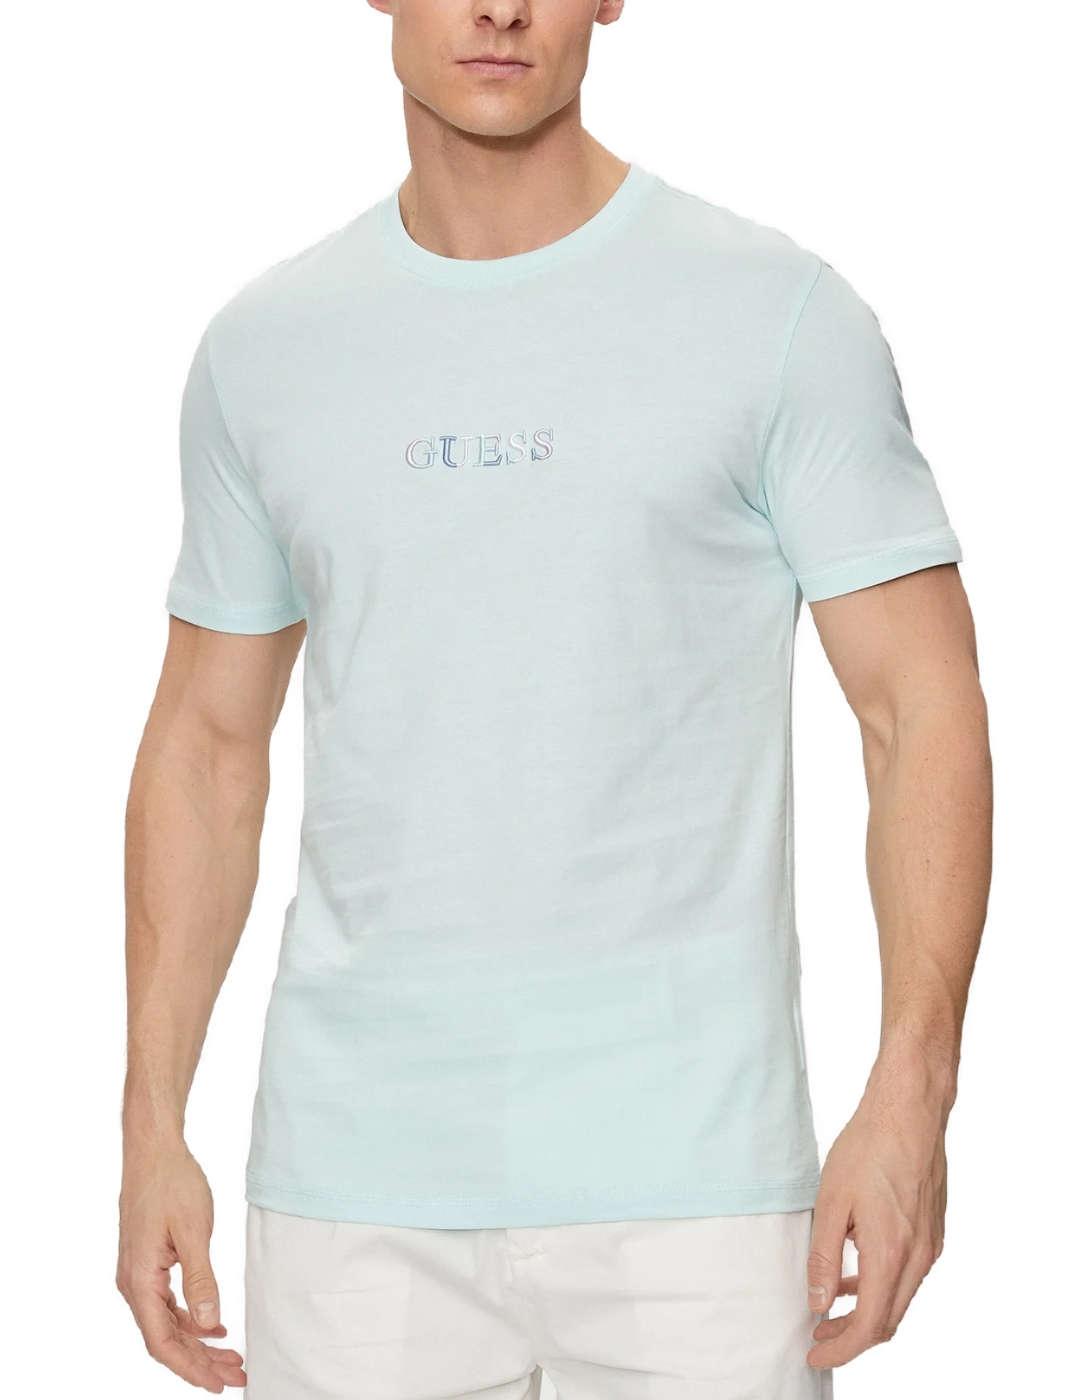 Camiseta Guess Multicolor celeste manga corta para hombre